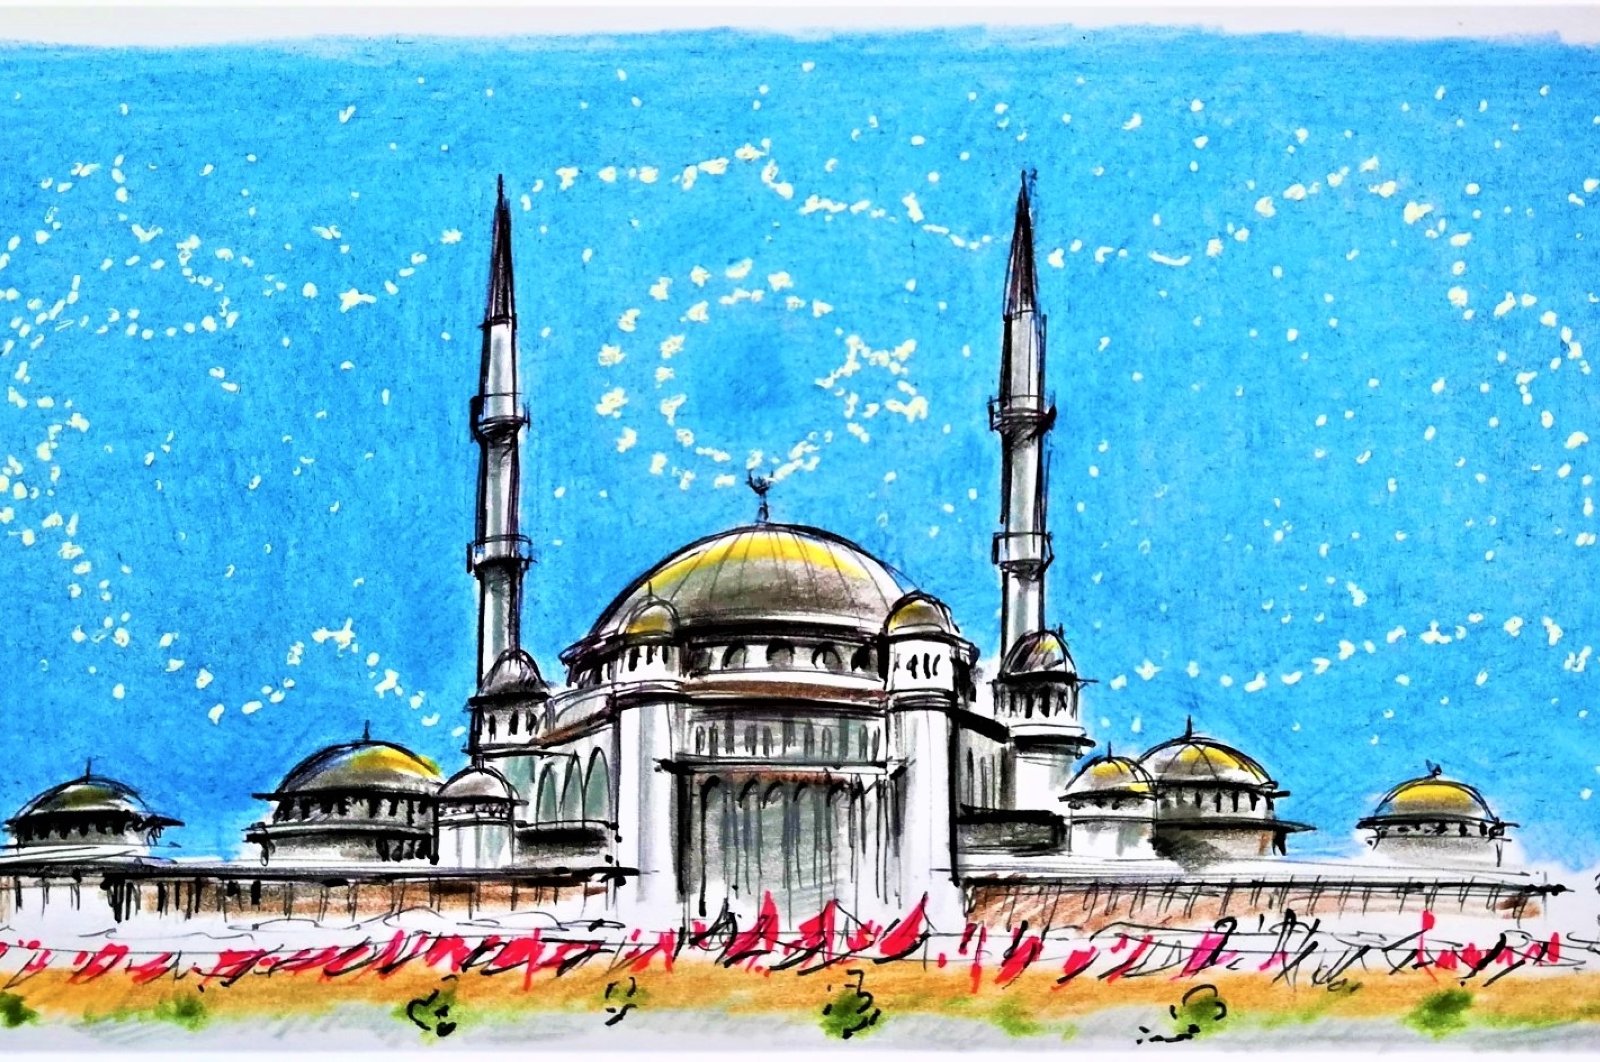 Illustration by Erhan Yalvaç.